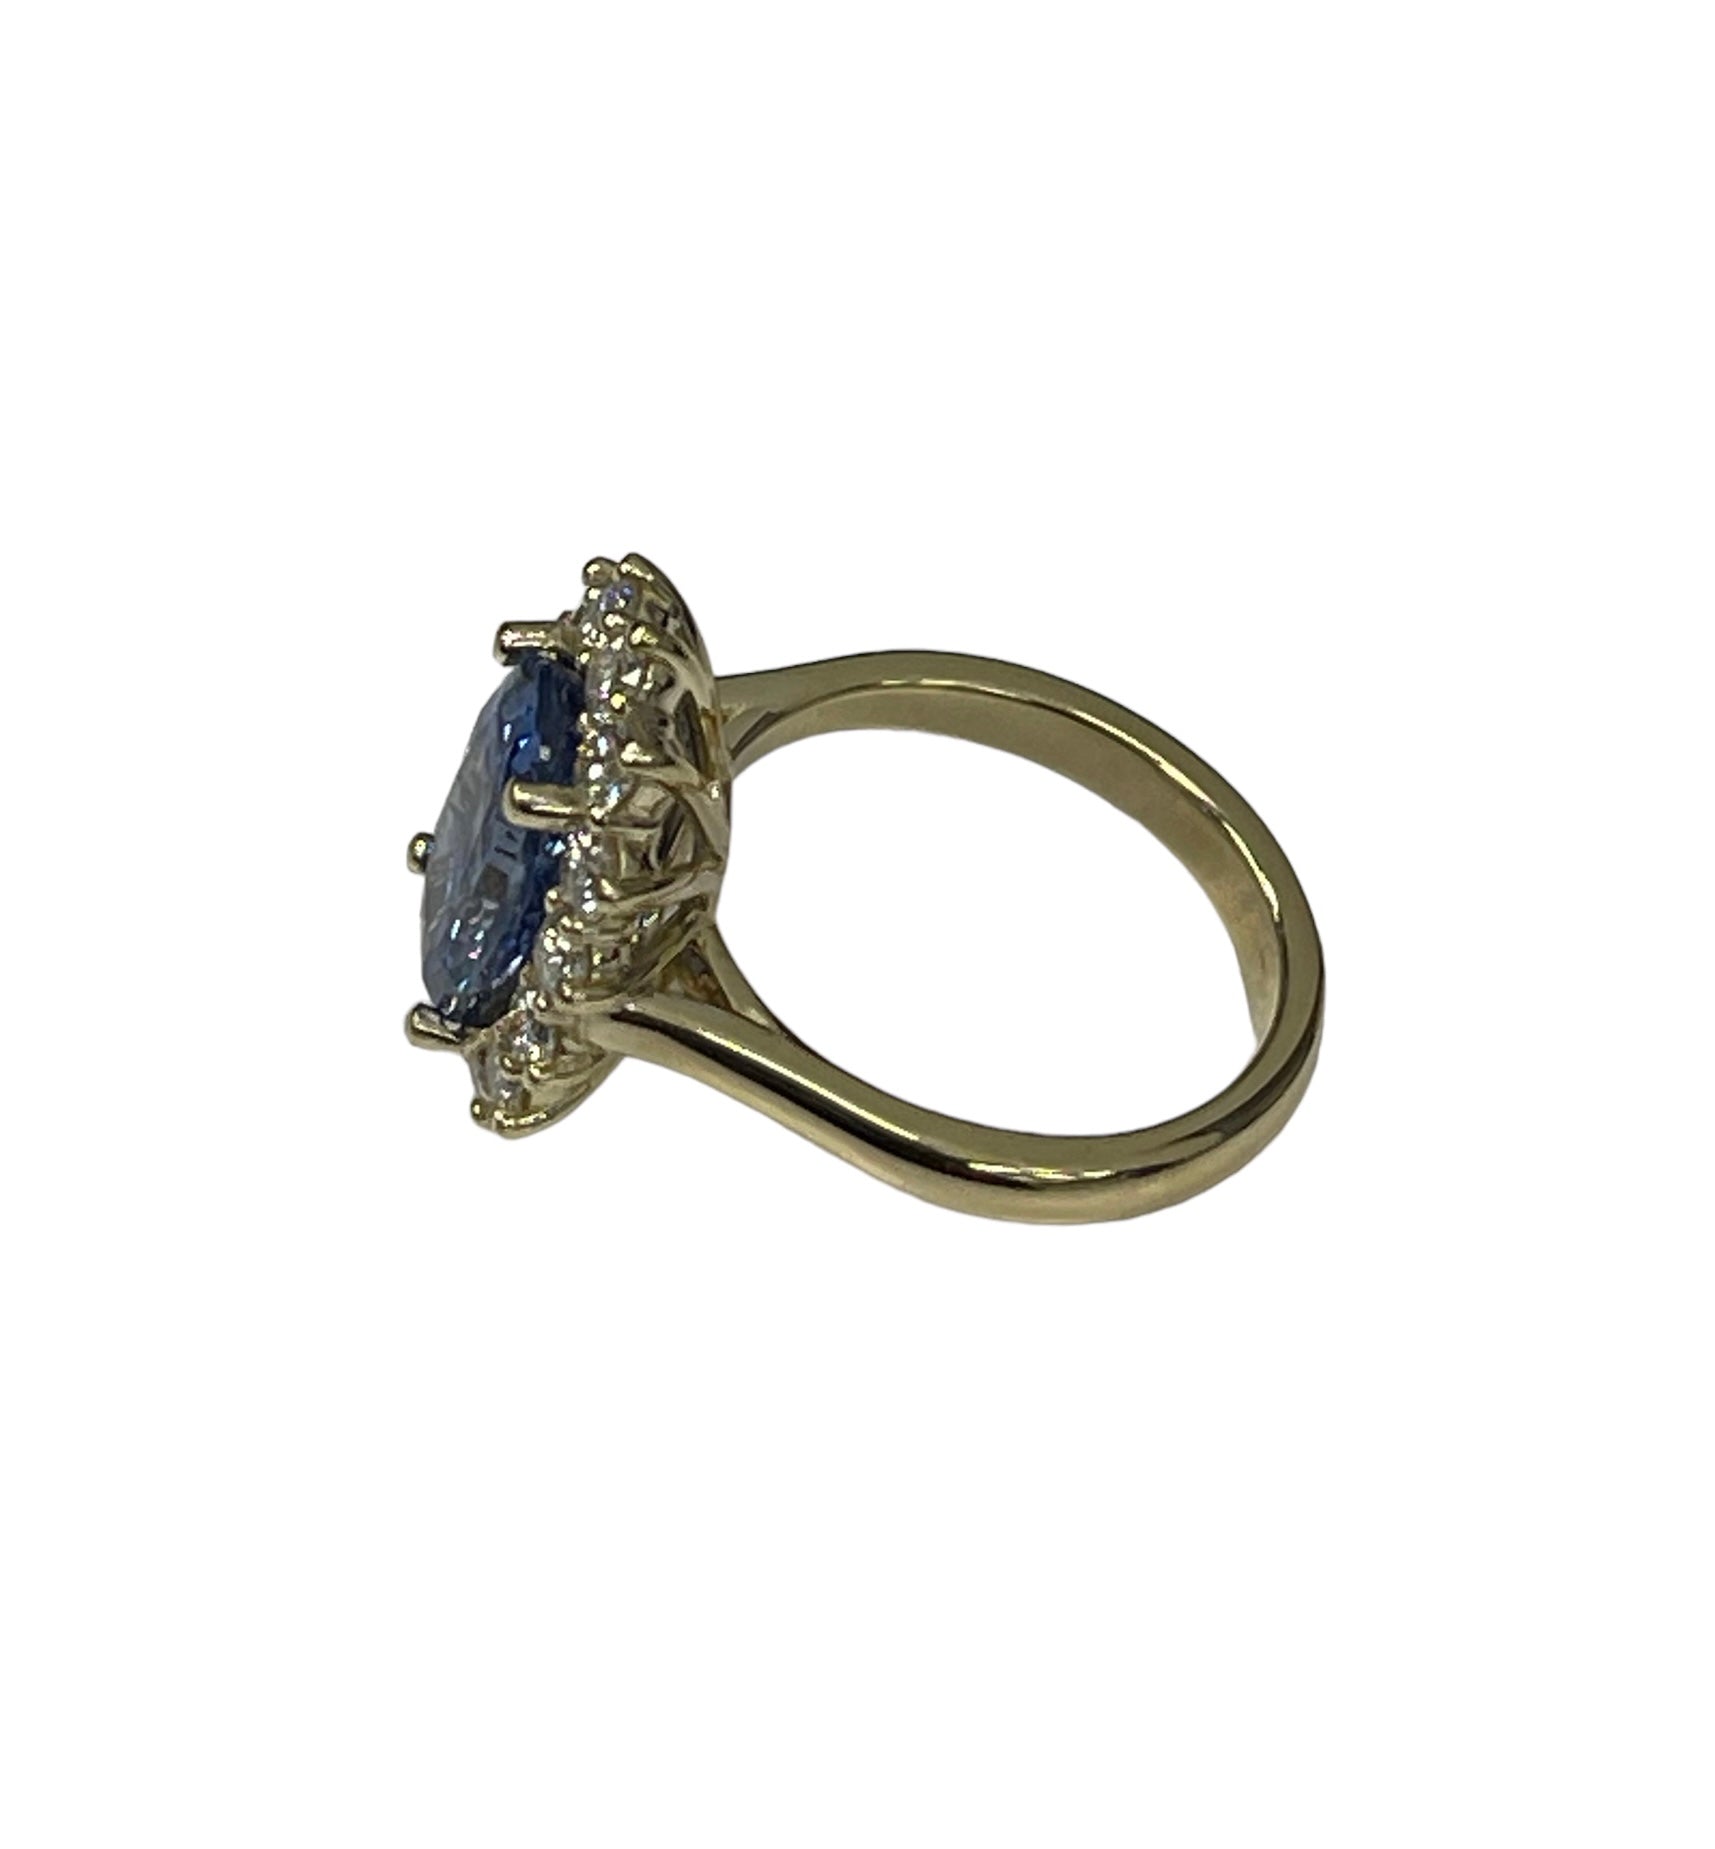 Ceylon Sapphire Diamond Ring Yellow Gold Certified